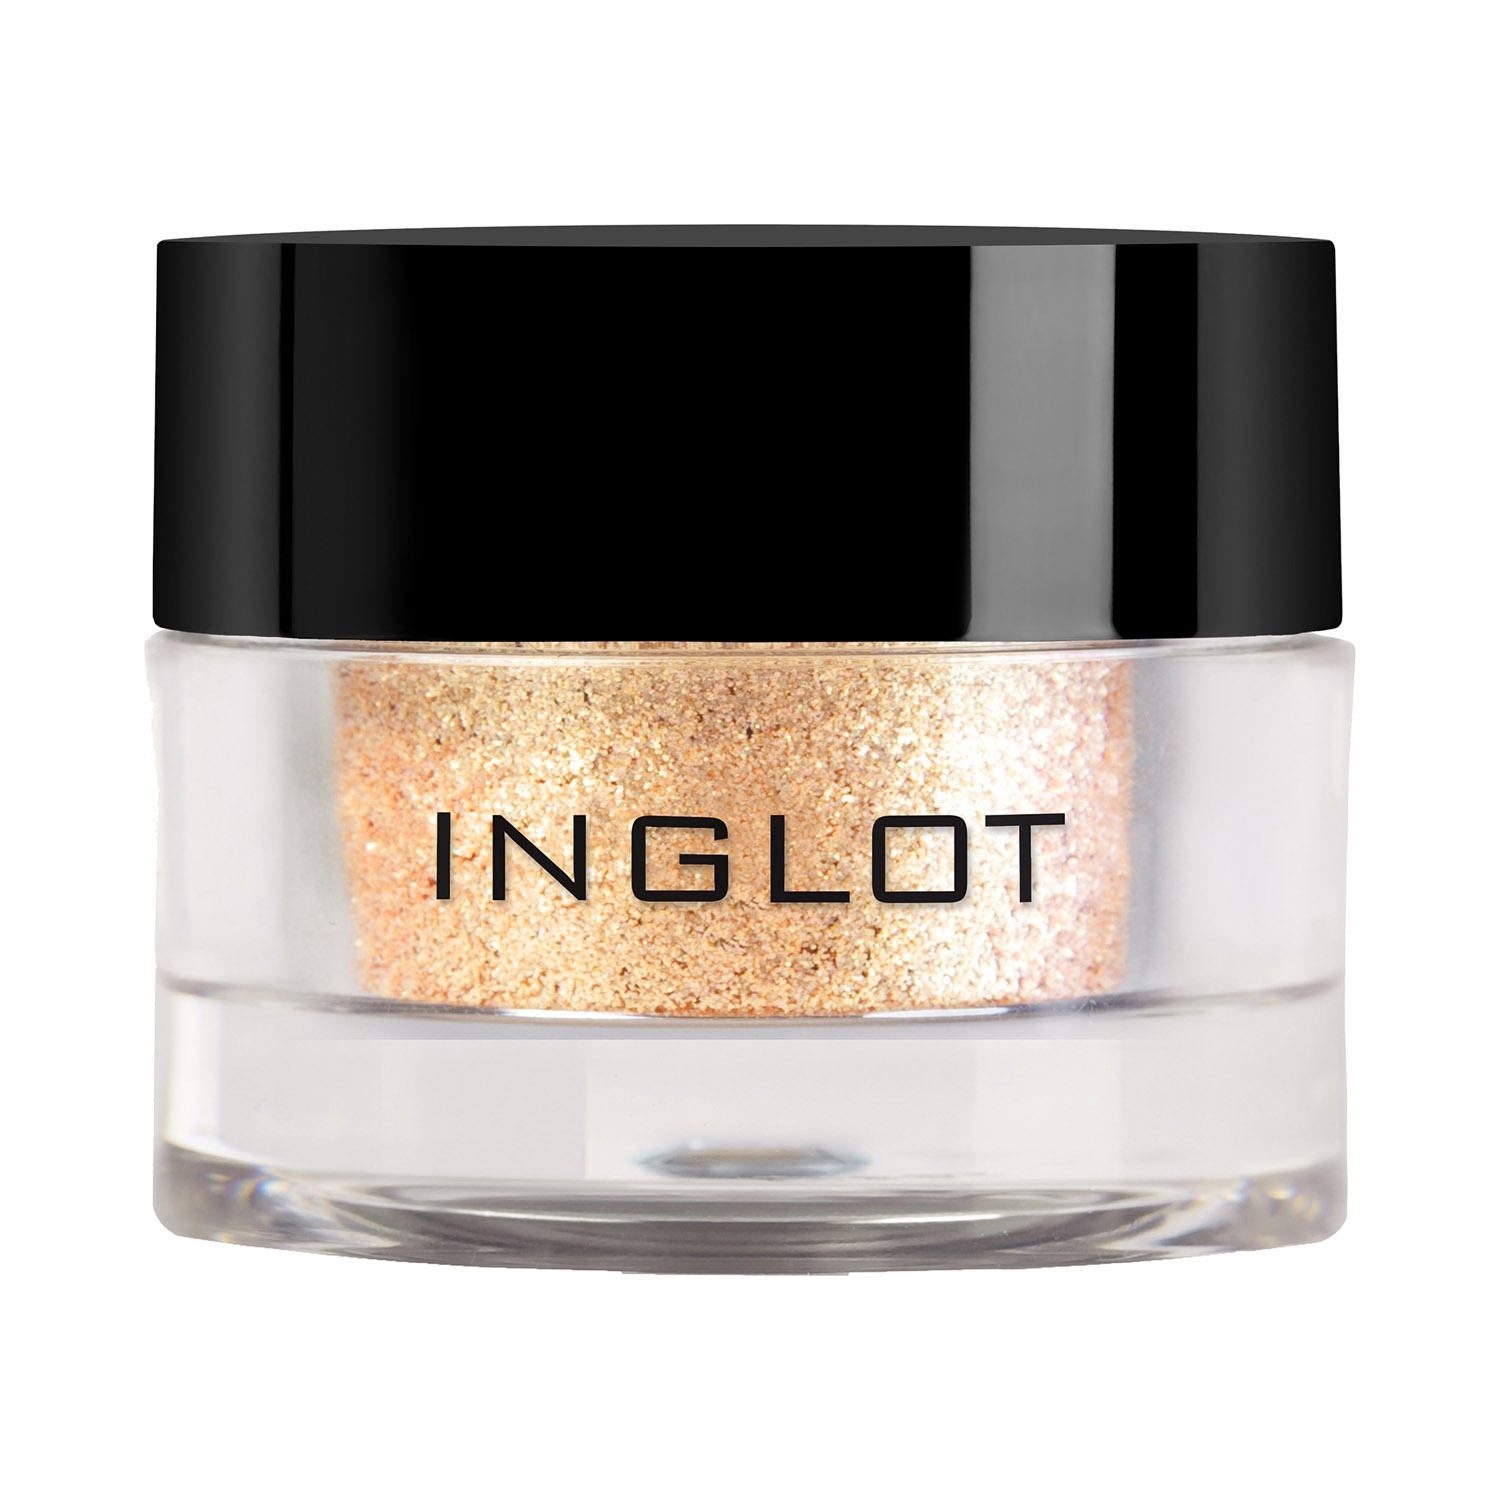 INGLOT | INGLOT Amc Pure Pigment Eye Shadow - 121 Shade (2g)